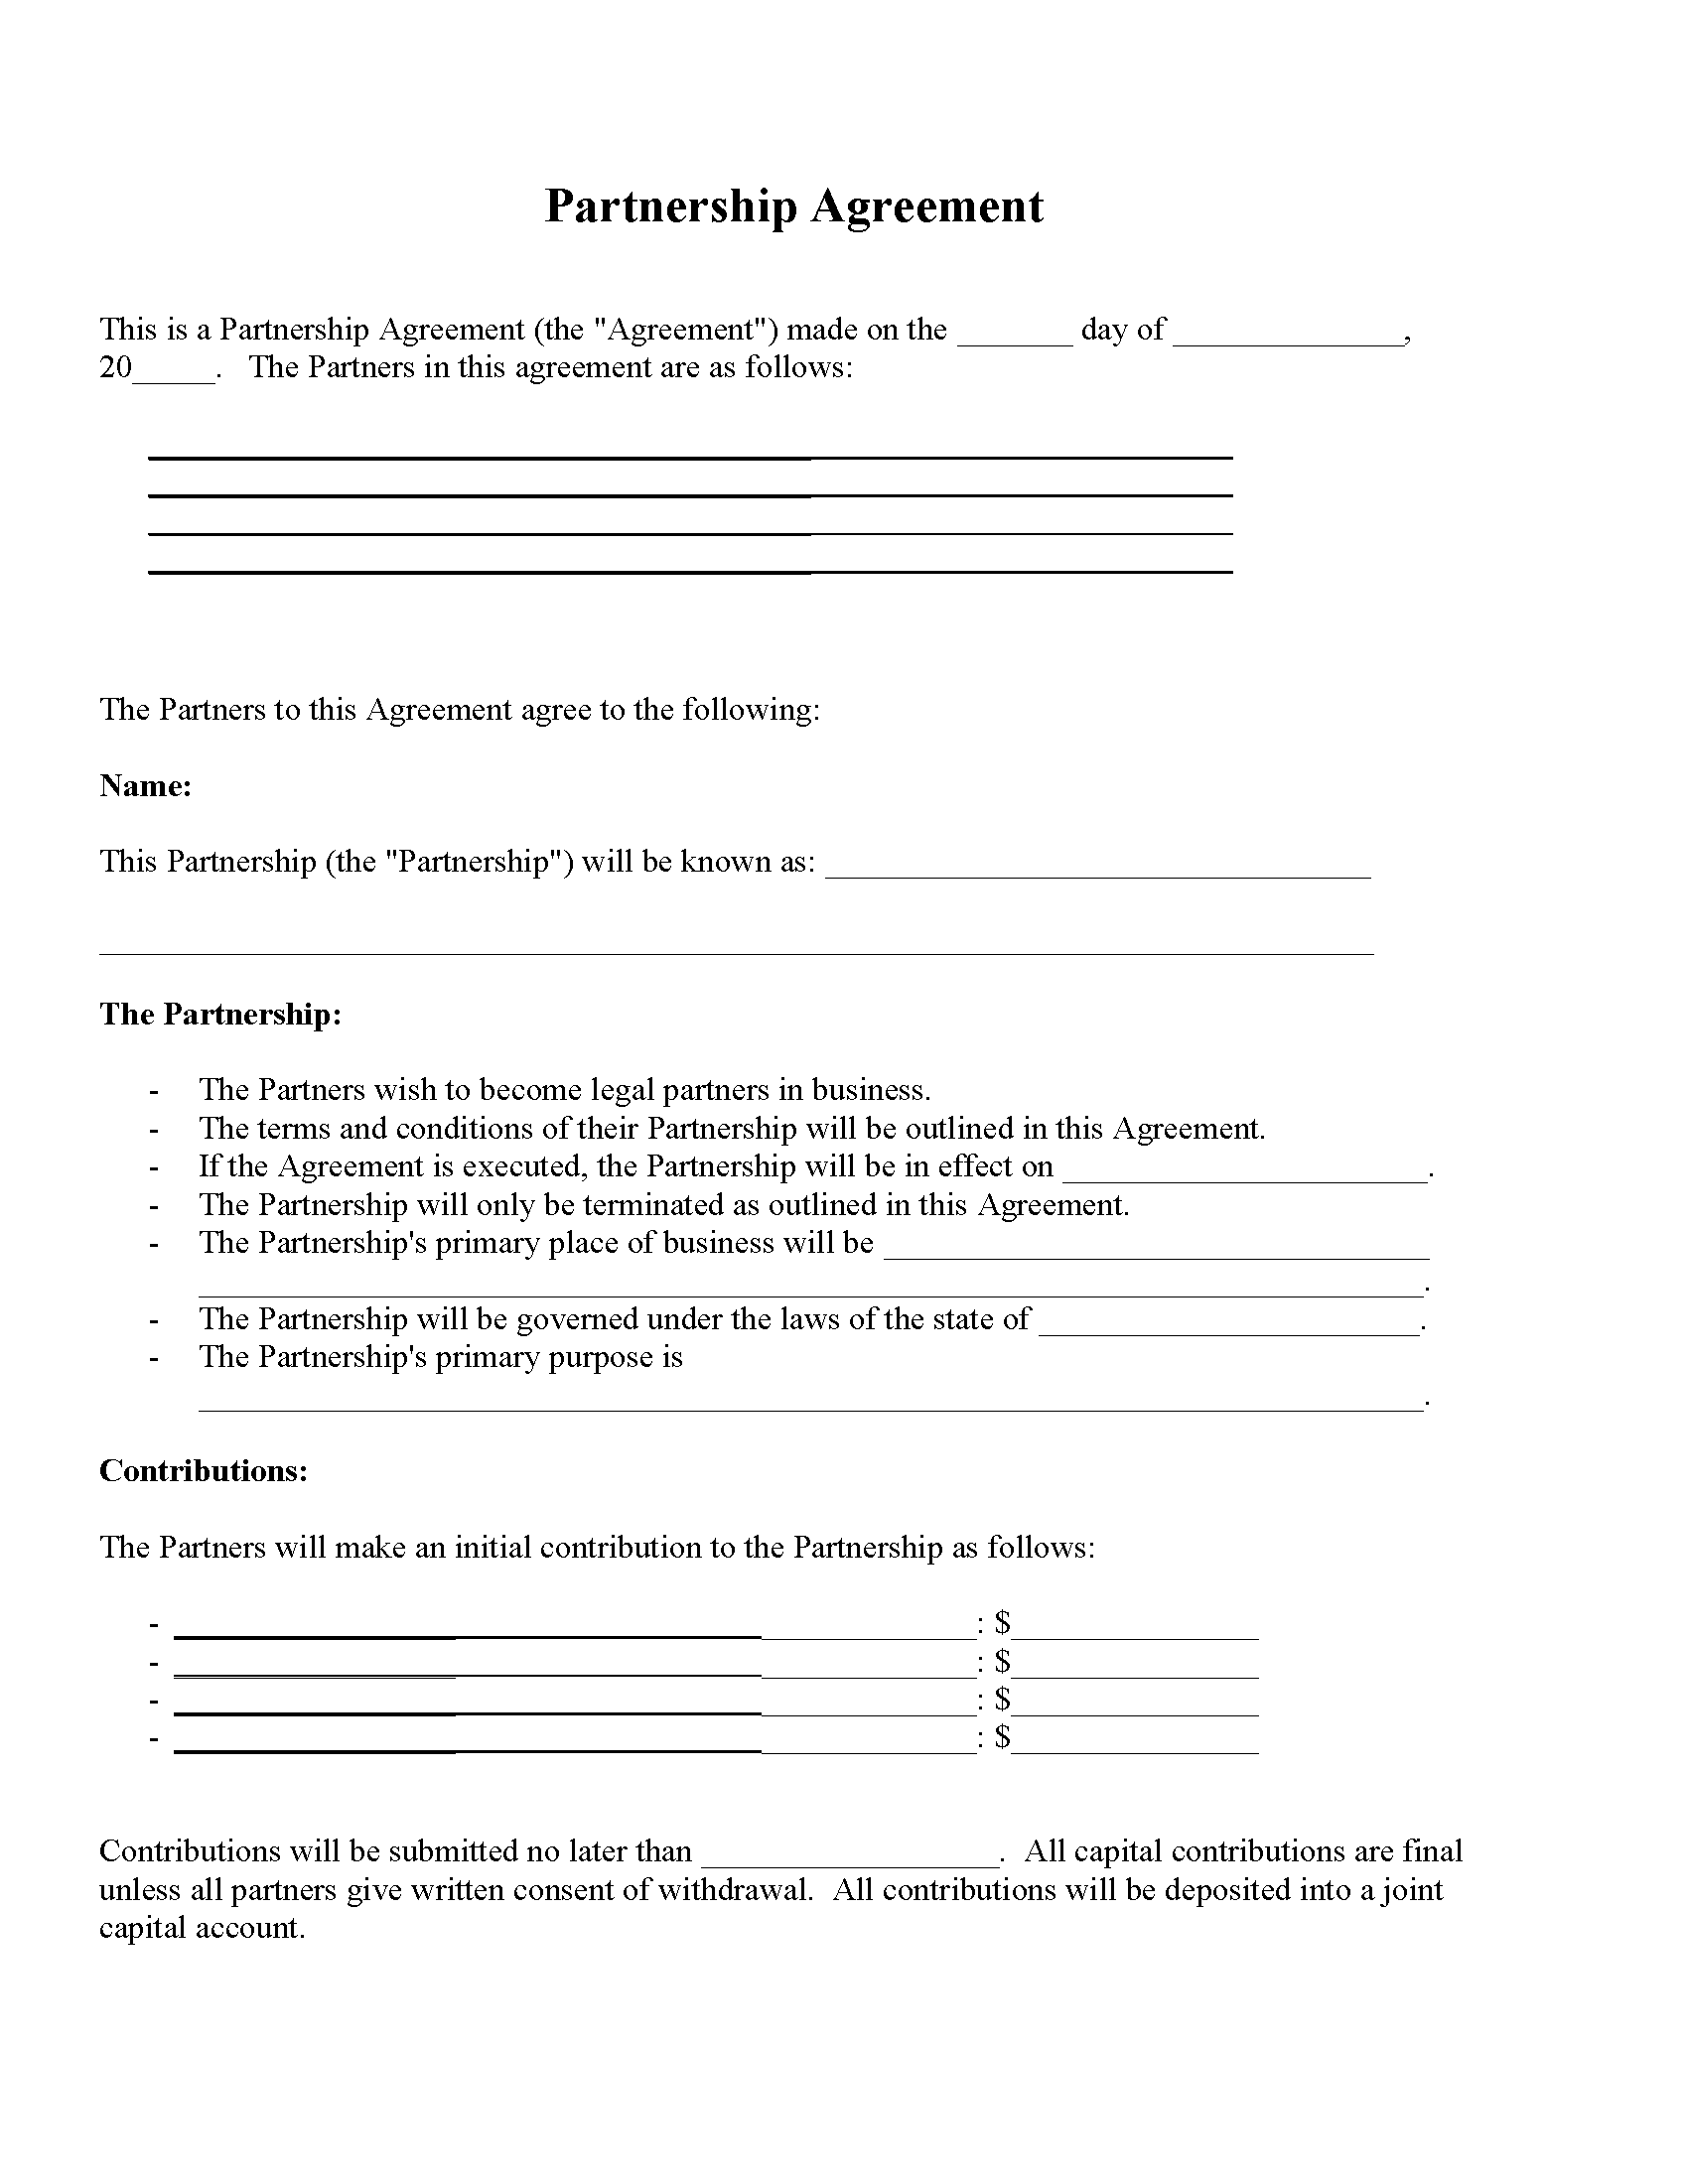 montana-partnership-agreement-form-free-printable-legal-forms